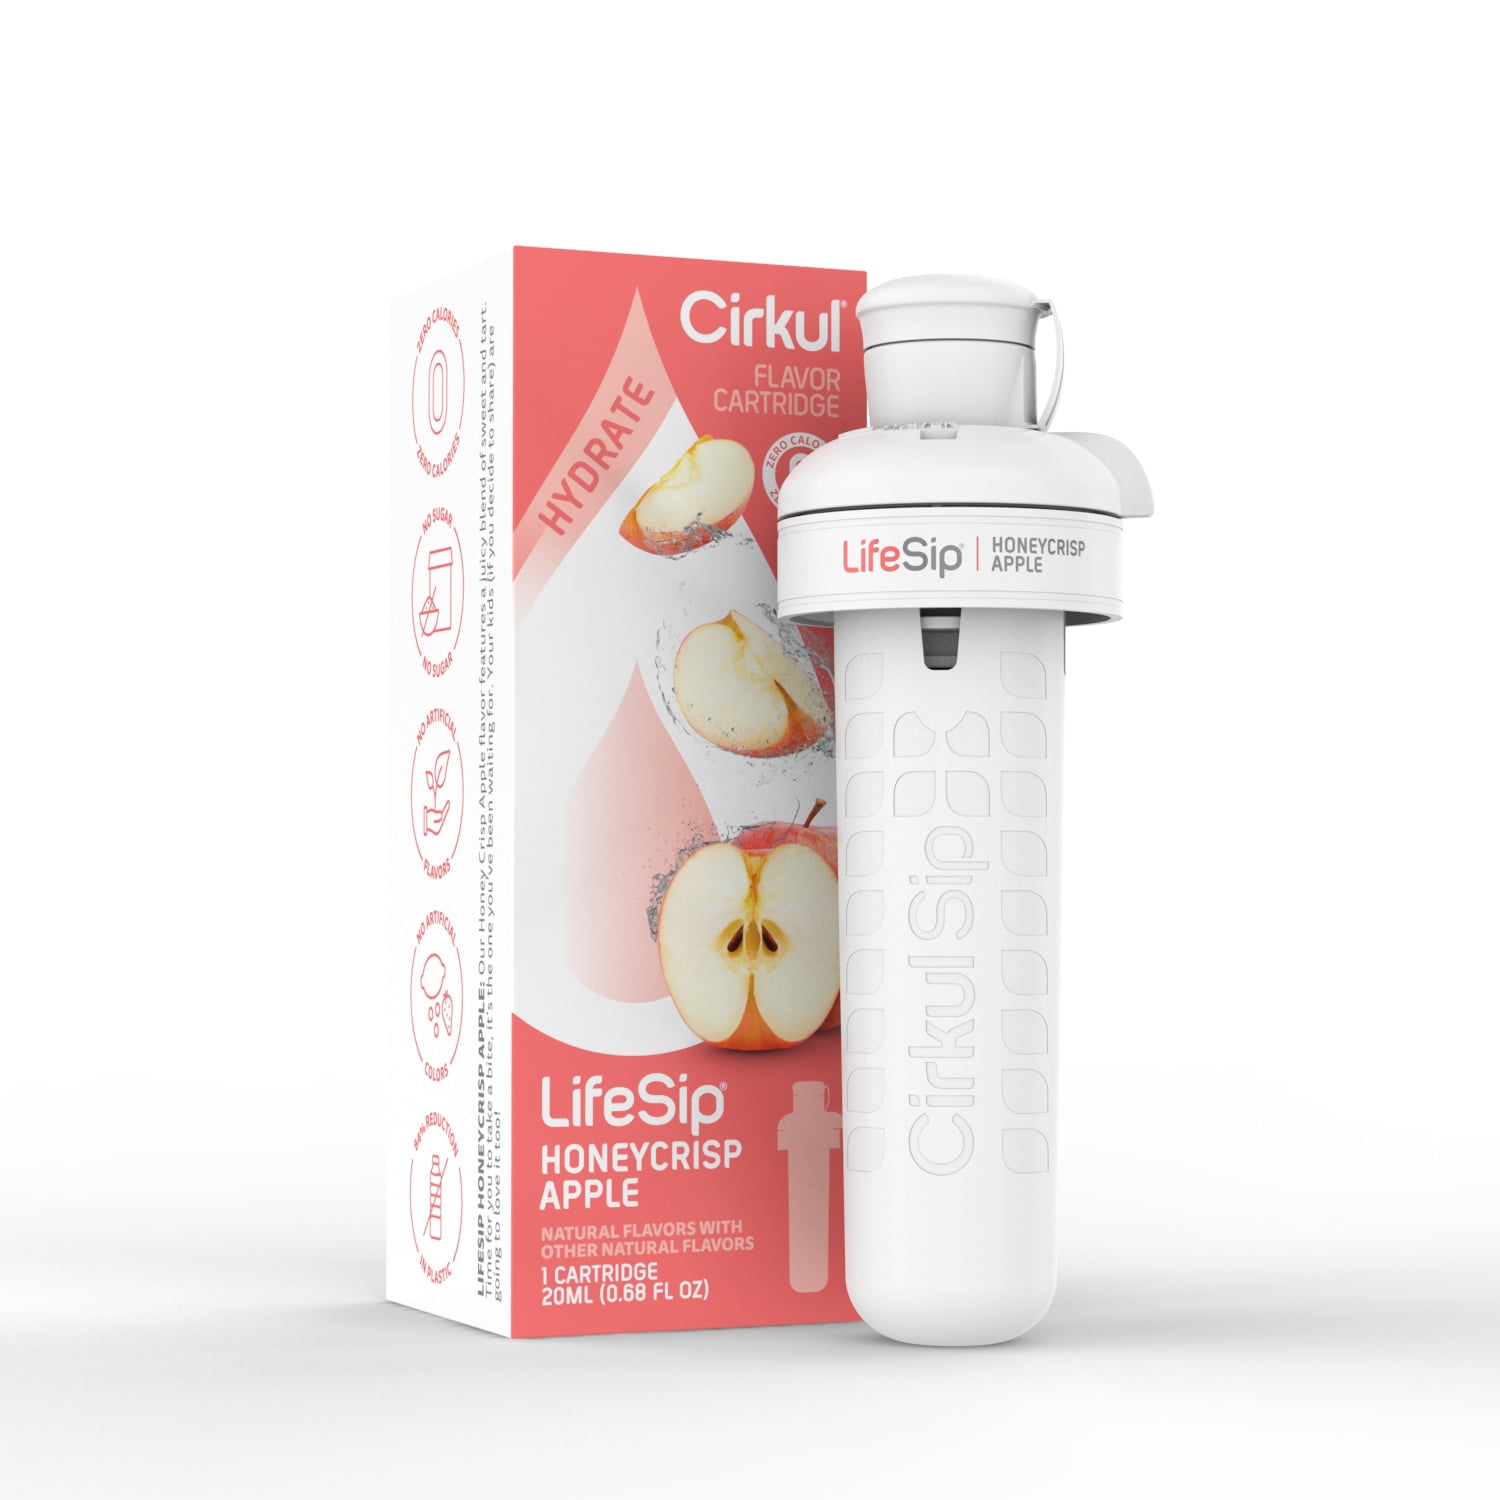 Cirkul LifeSip Honeycrisp Apple Flavor Cartridge, Drink Mix, 2-pack